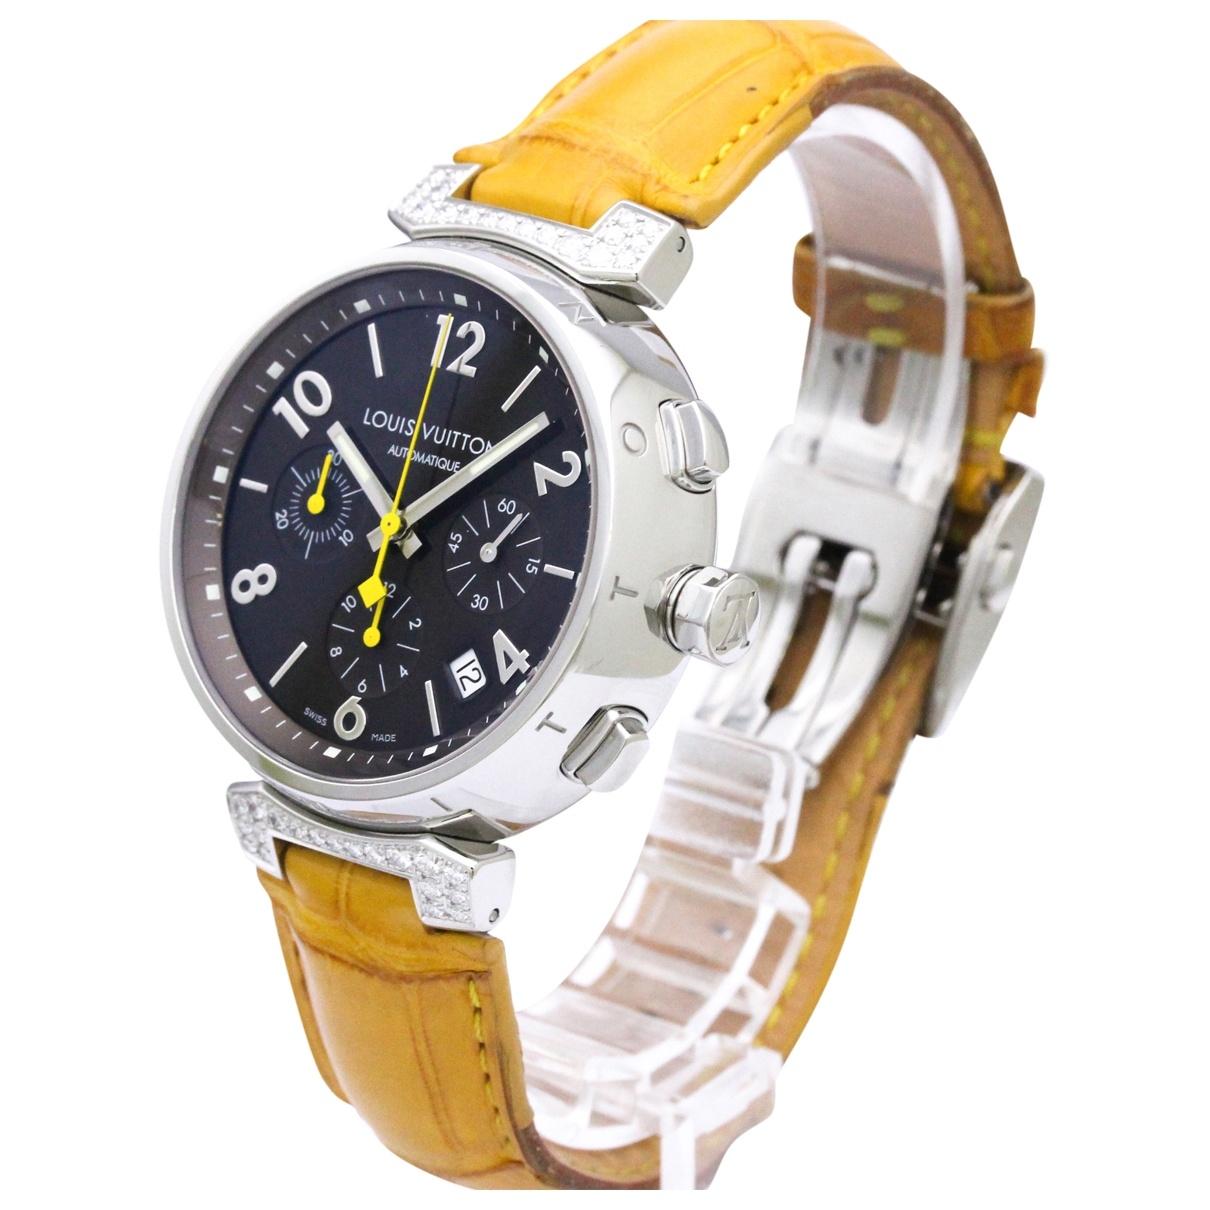 Lyst - Louis Vuitton Tambour Chronographe Watch in Metallic